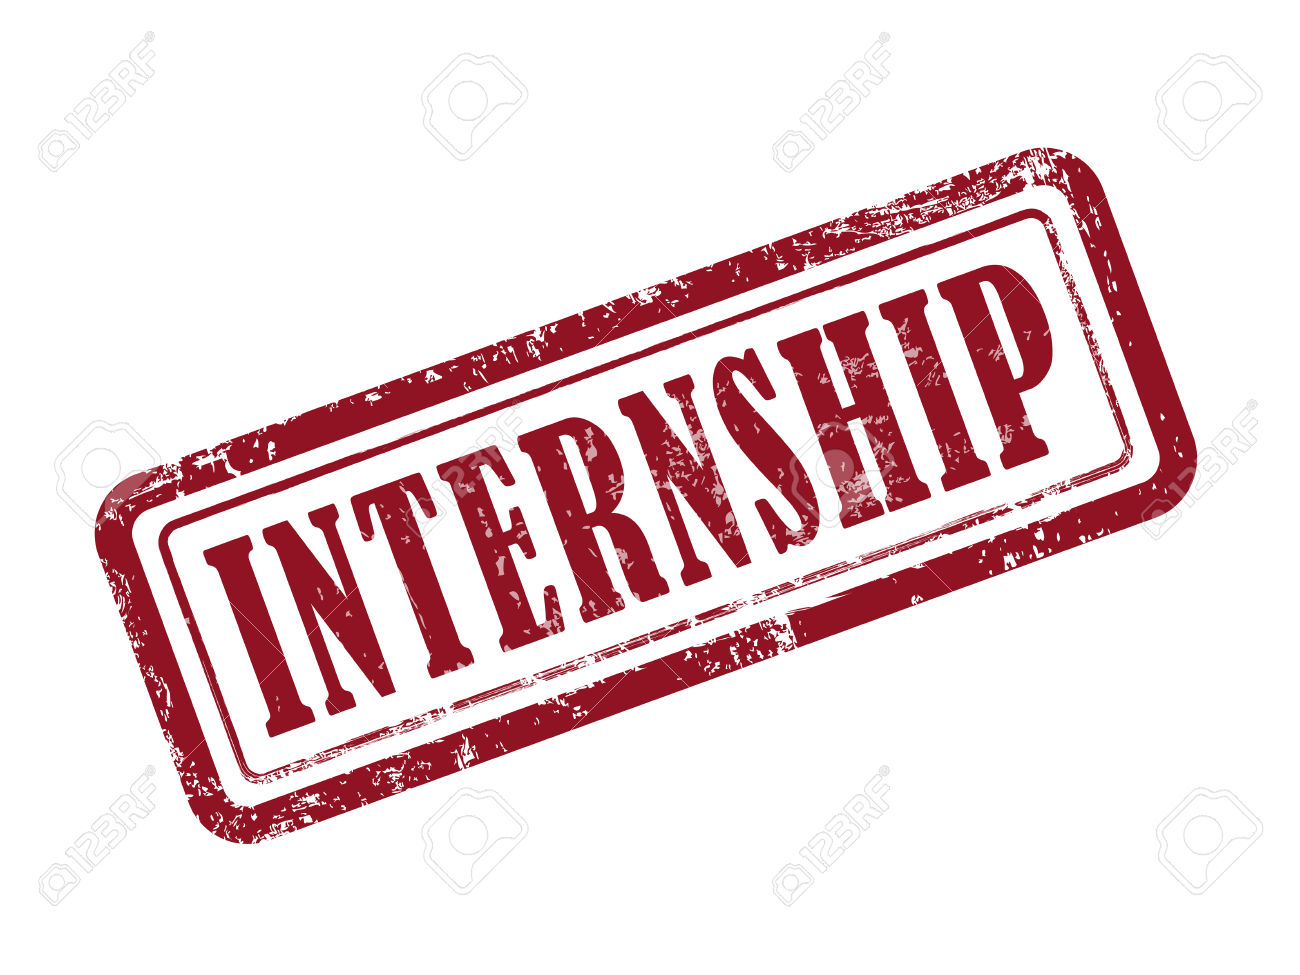 careers clipart internship